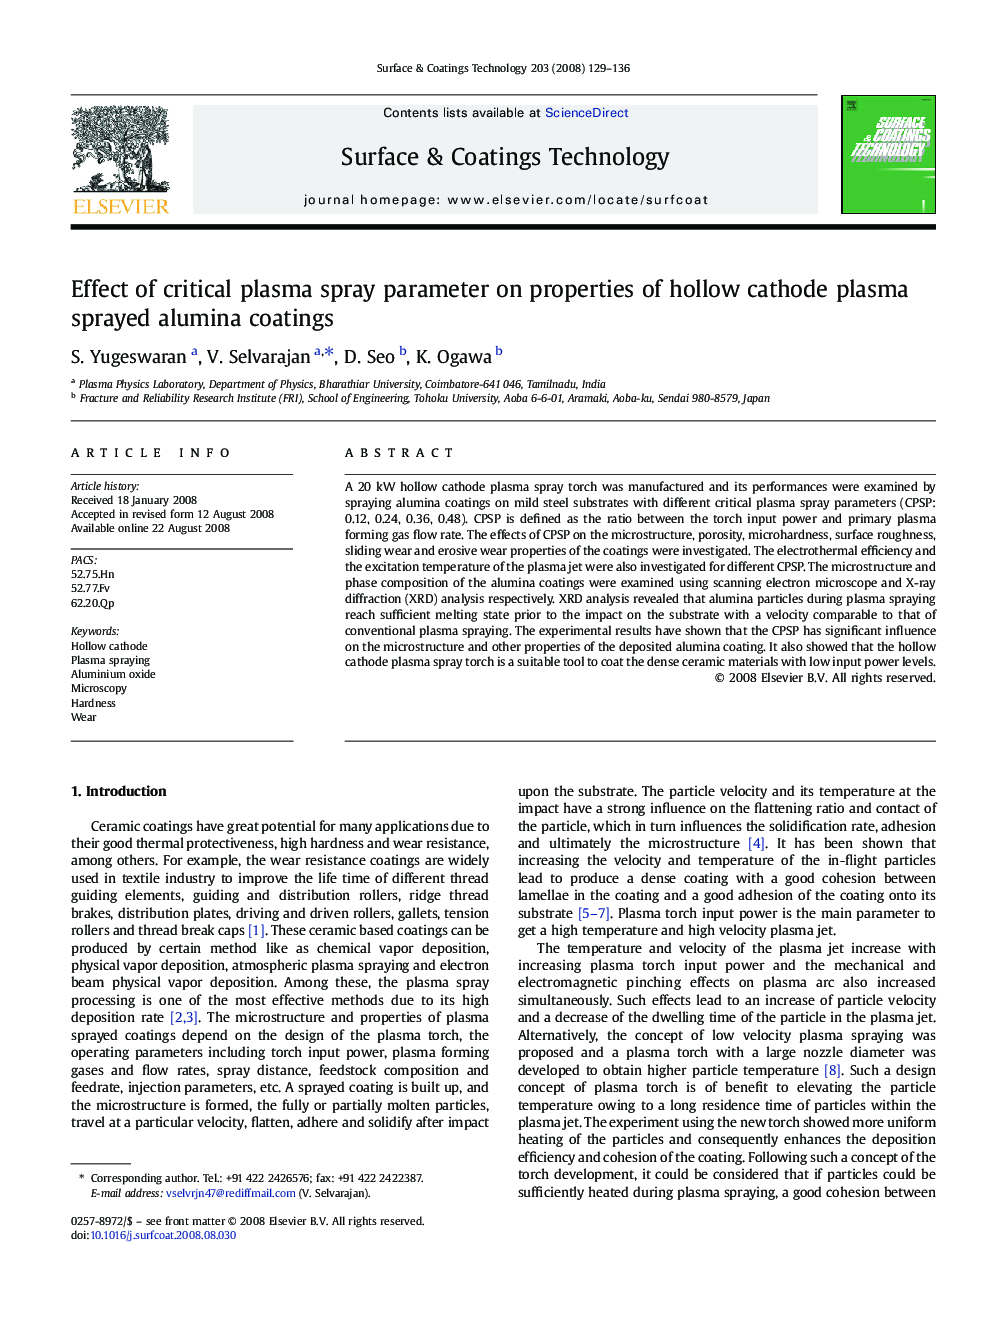 Effect of critical plasma spray parameter on properties of hollow cathode plasma sprayed alumina coatings